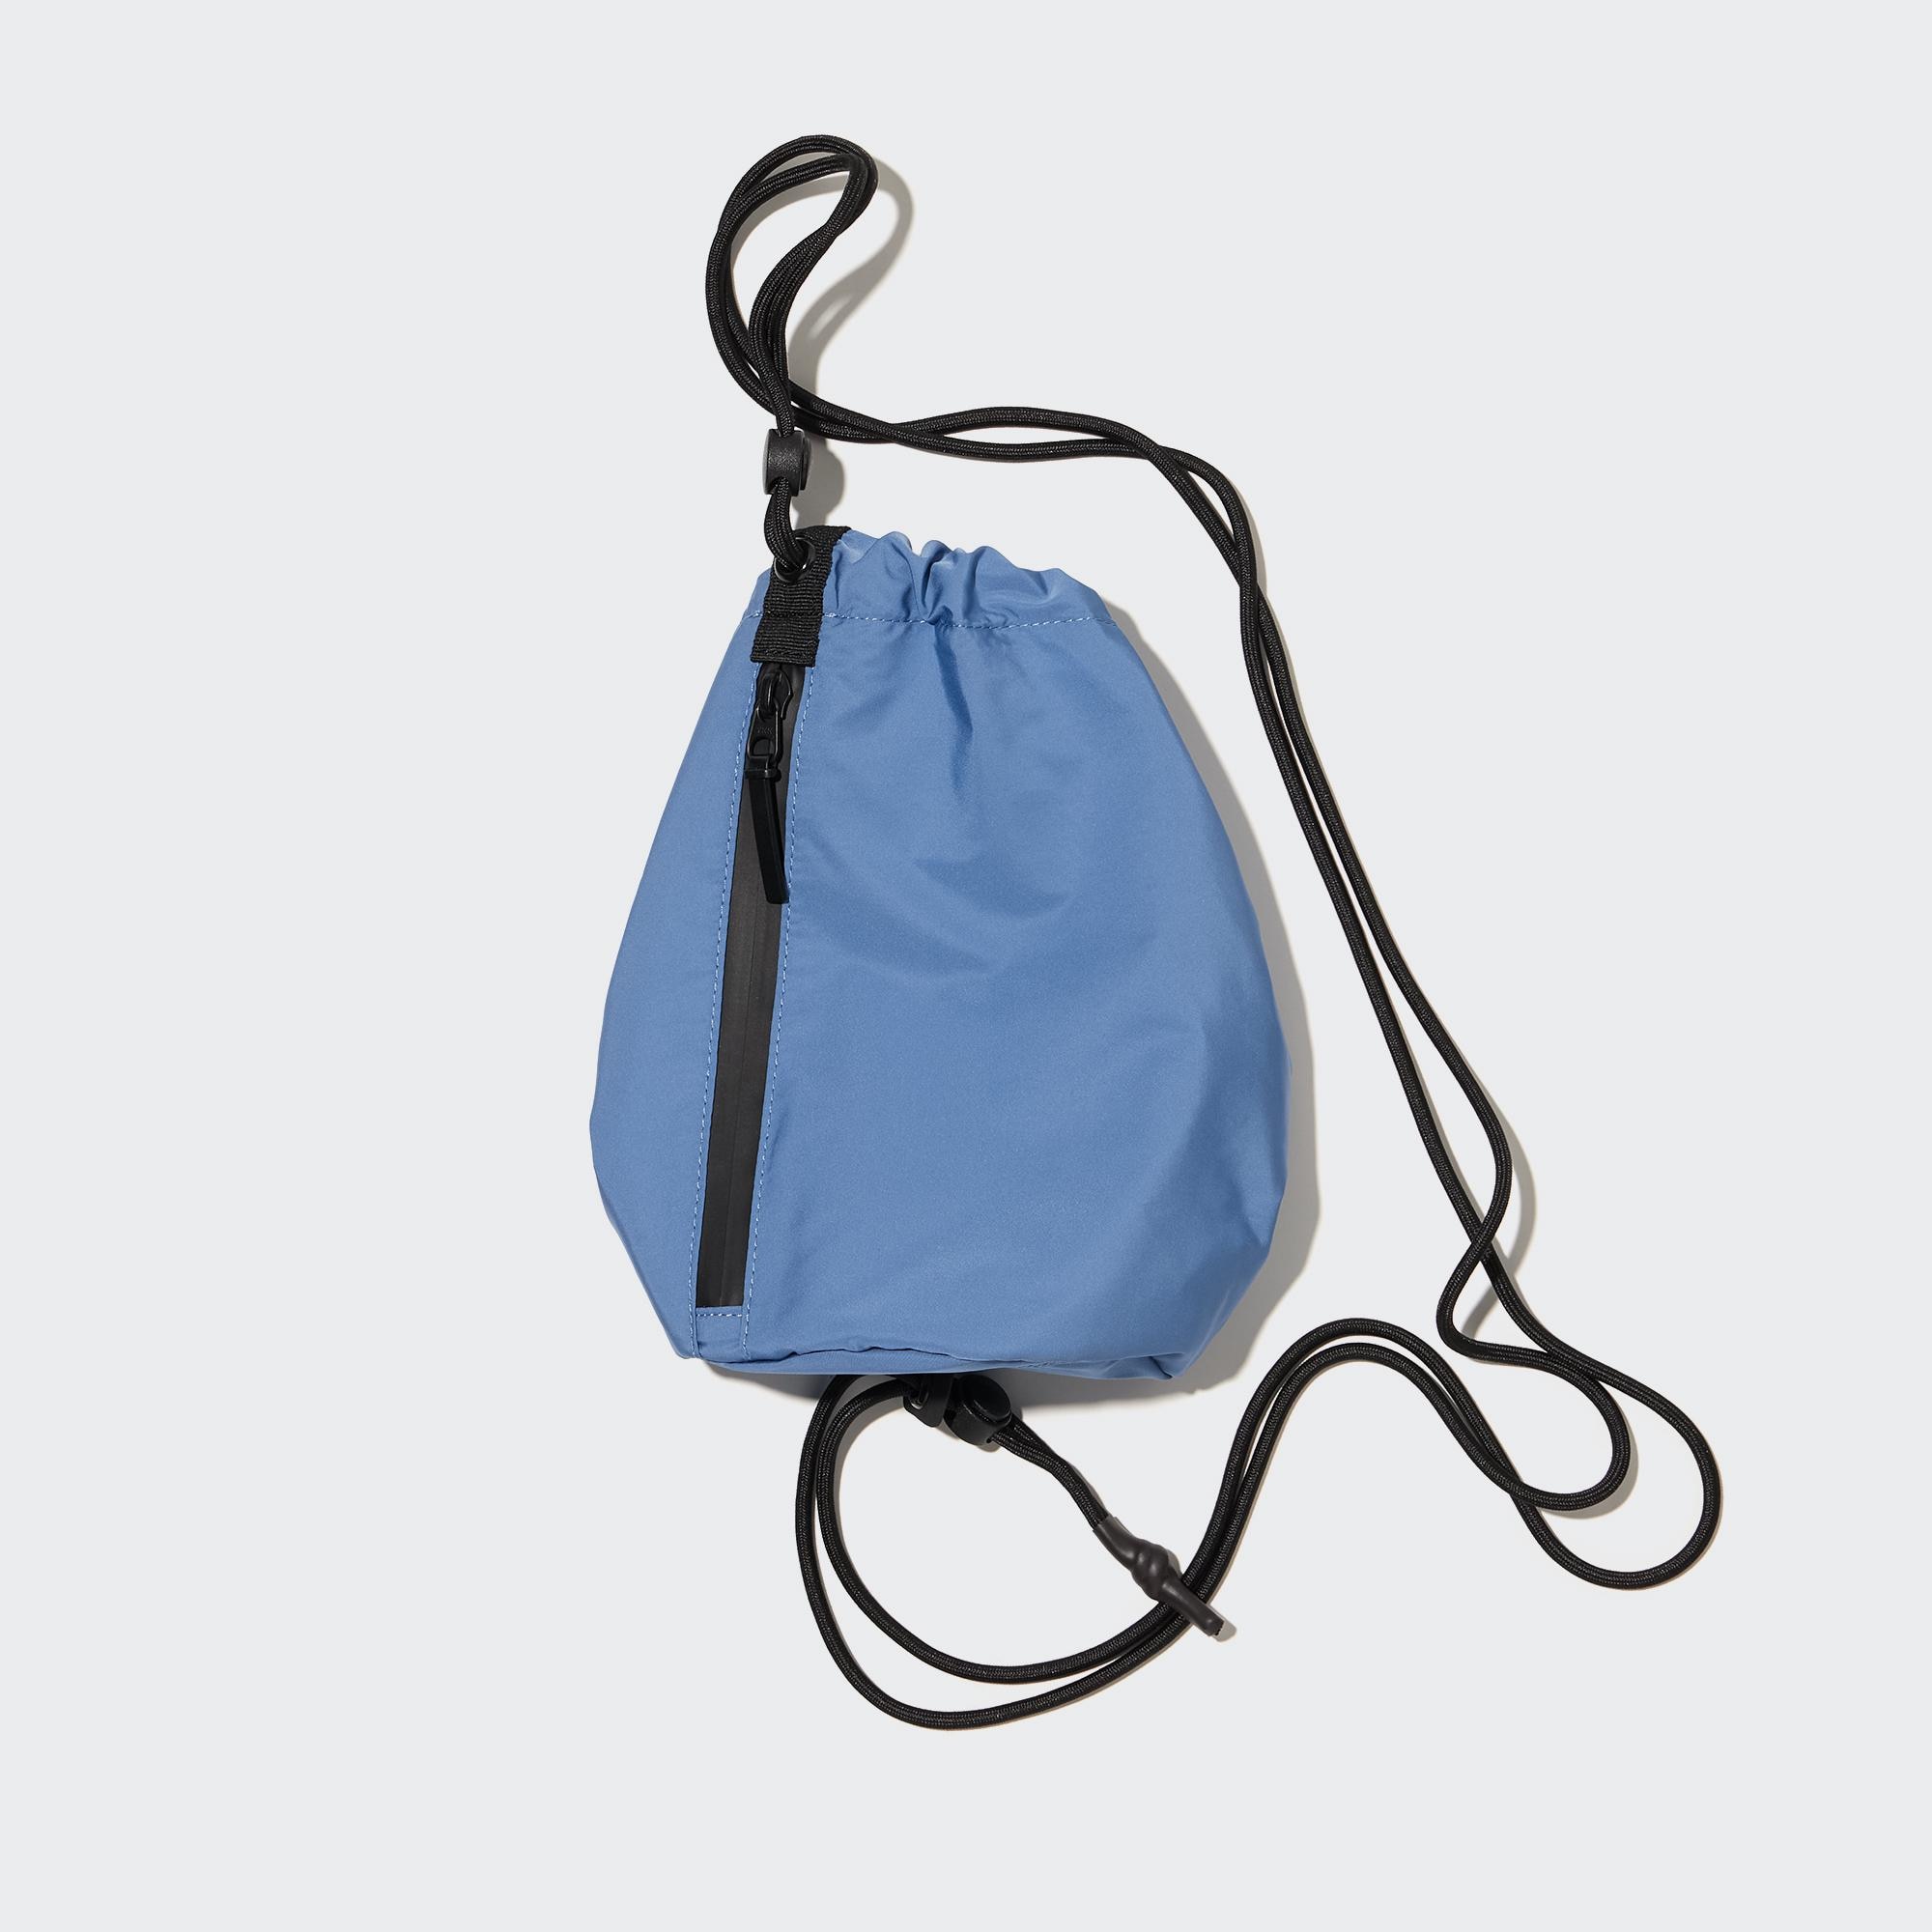 UNIQLO Round Mini Shoulder Bag | StyleHint